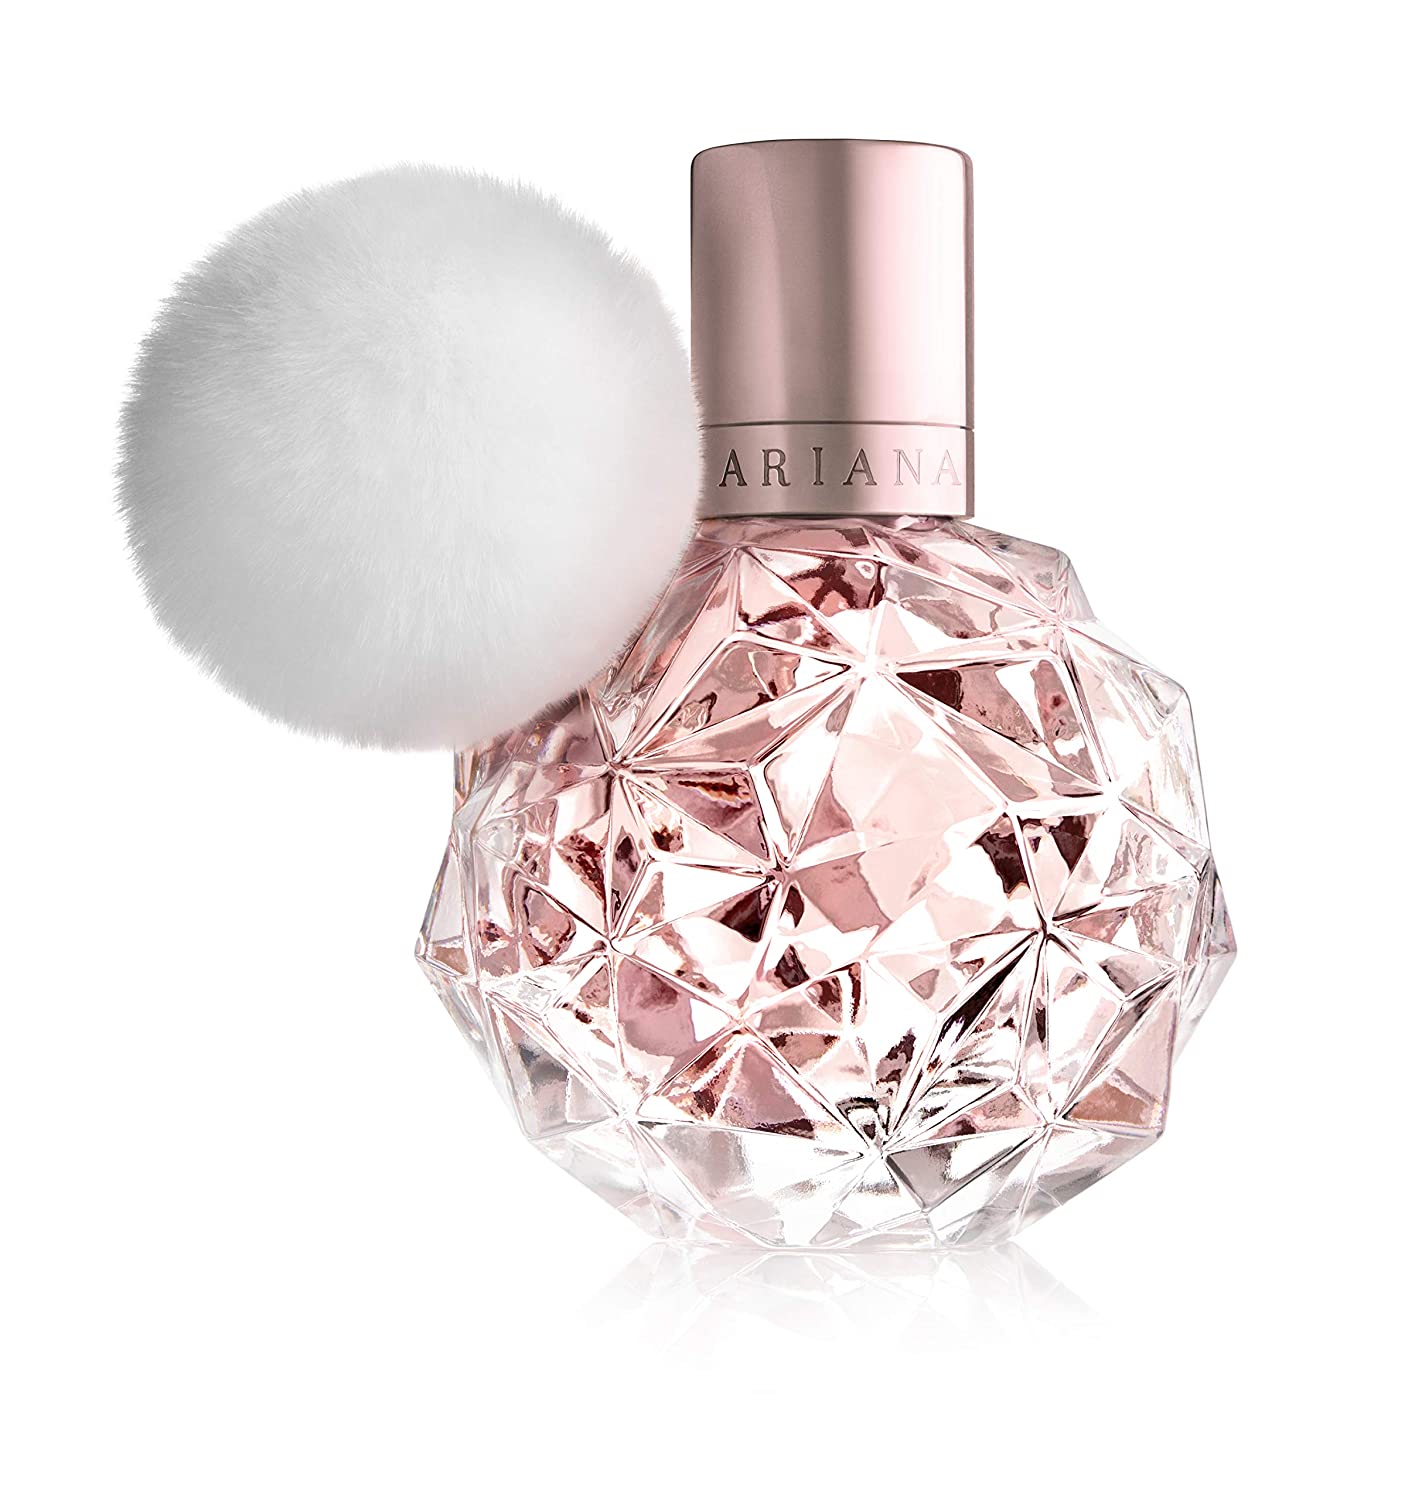 Ariana Grande Sweet Like Candy Eau de Parfum, 3.4 Ounce Bottle